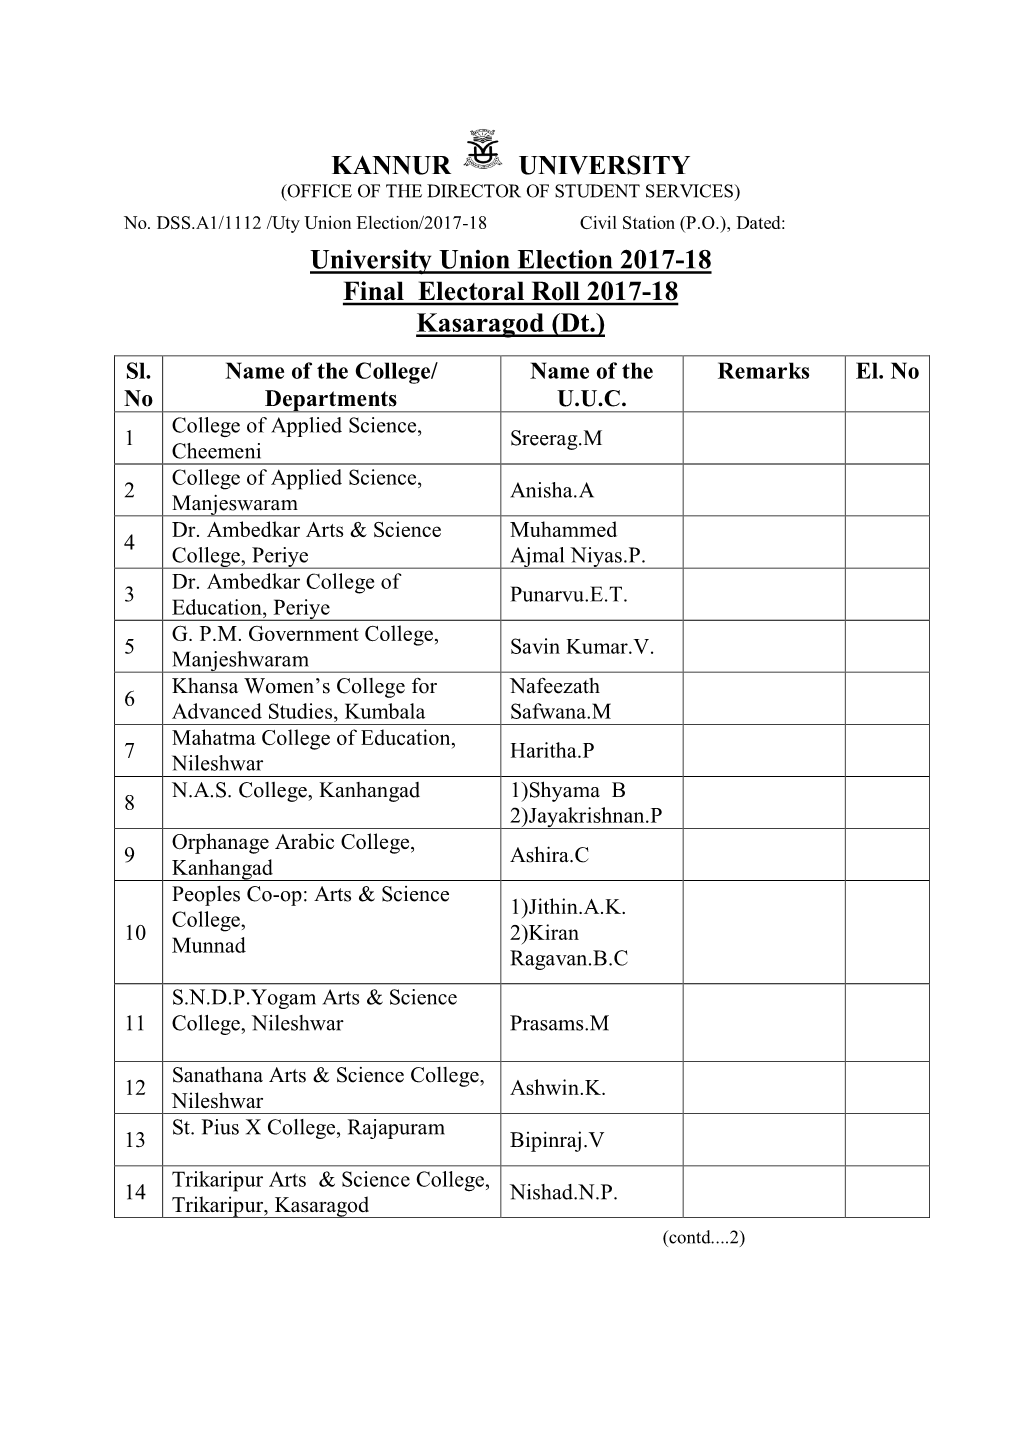 KANNUR UNIVERSITY University Union Election 2017-18 Final Electoral Roll 2017-18 Kasaragod